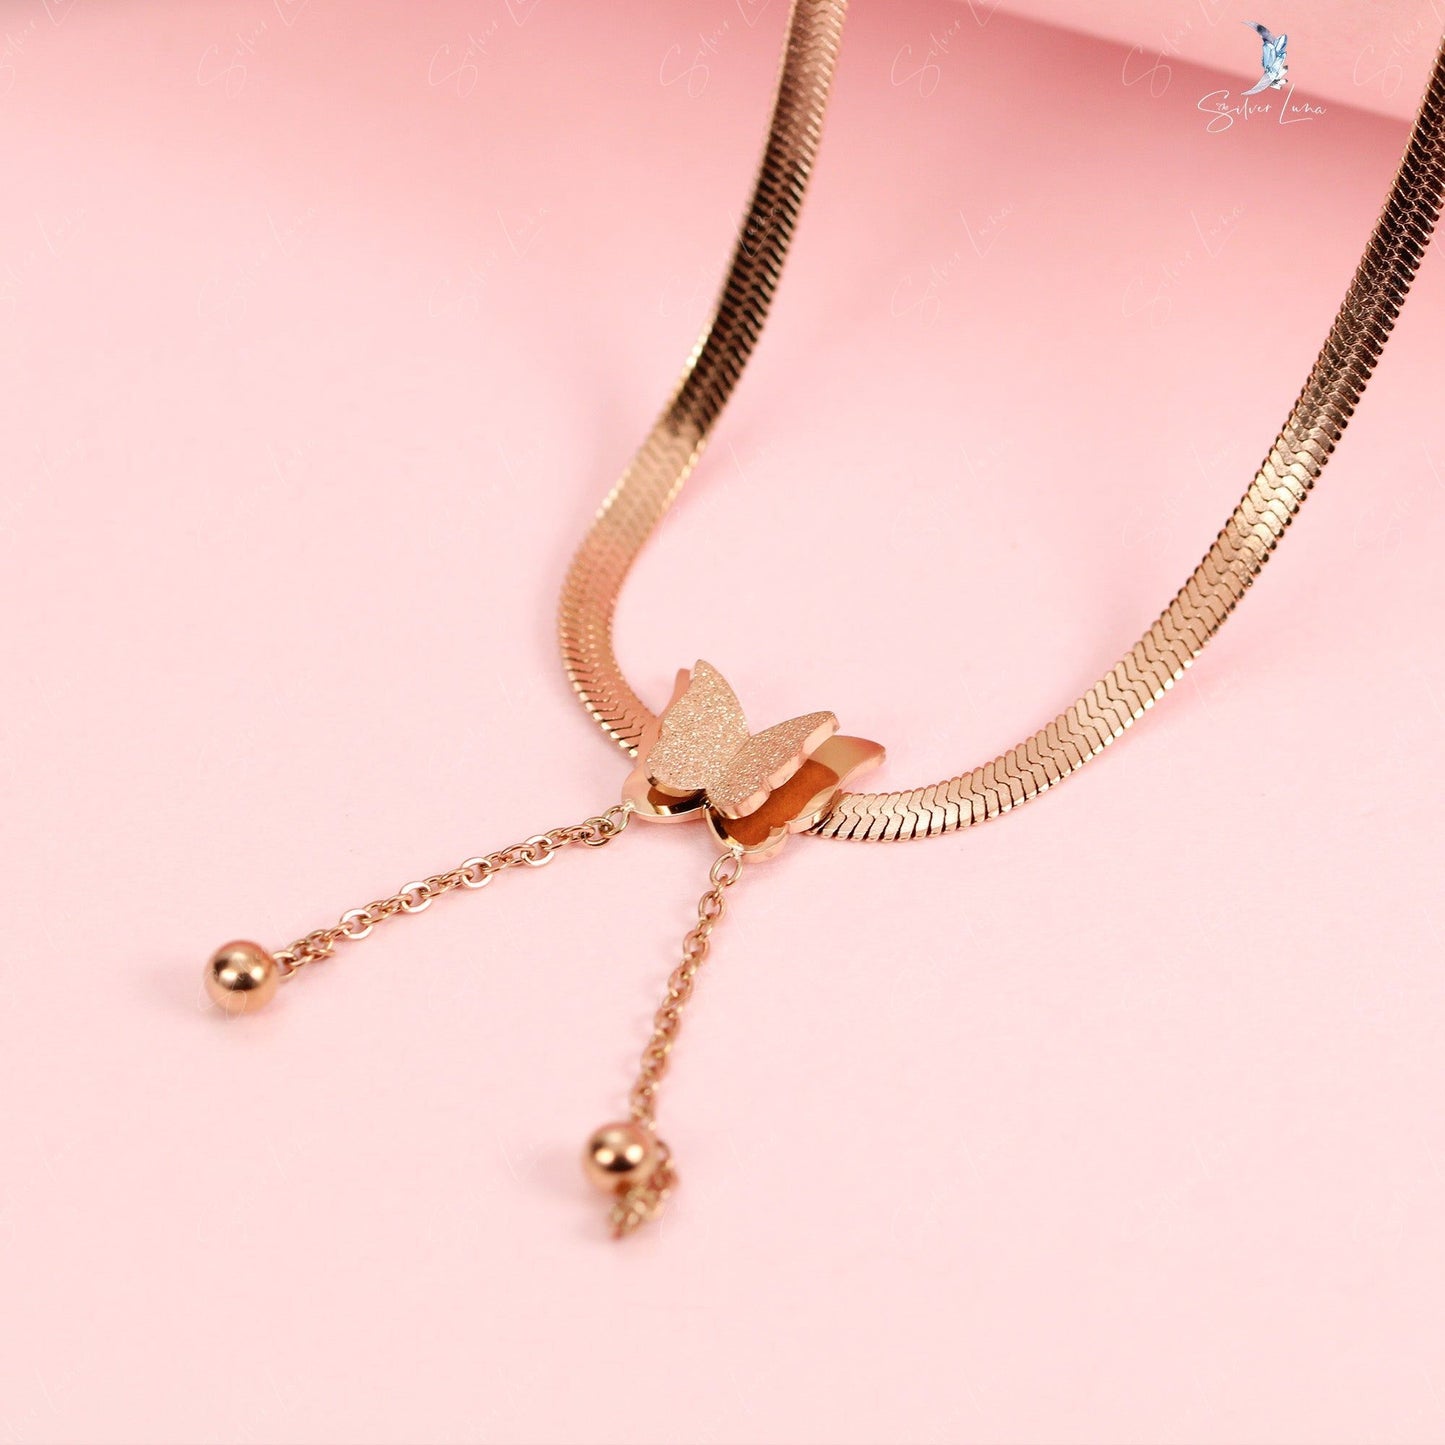 Butterfly snake chain choker necklace